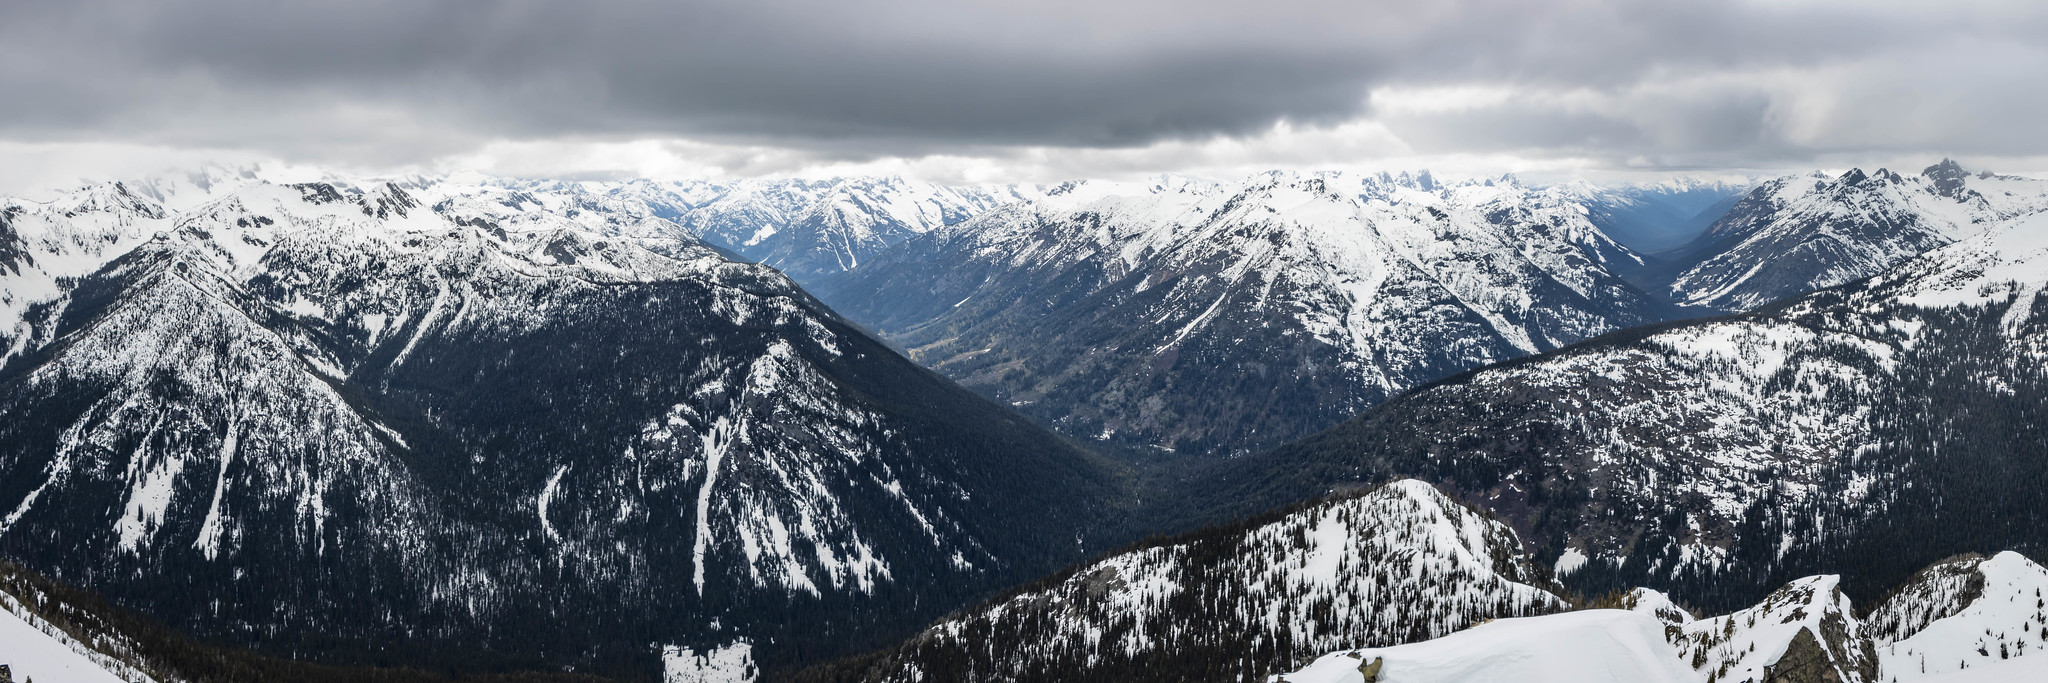 Northwest panorama from Hock Mountain